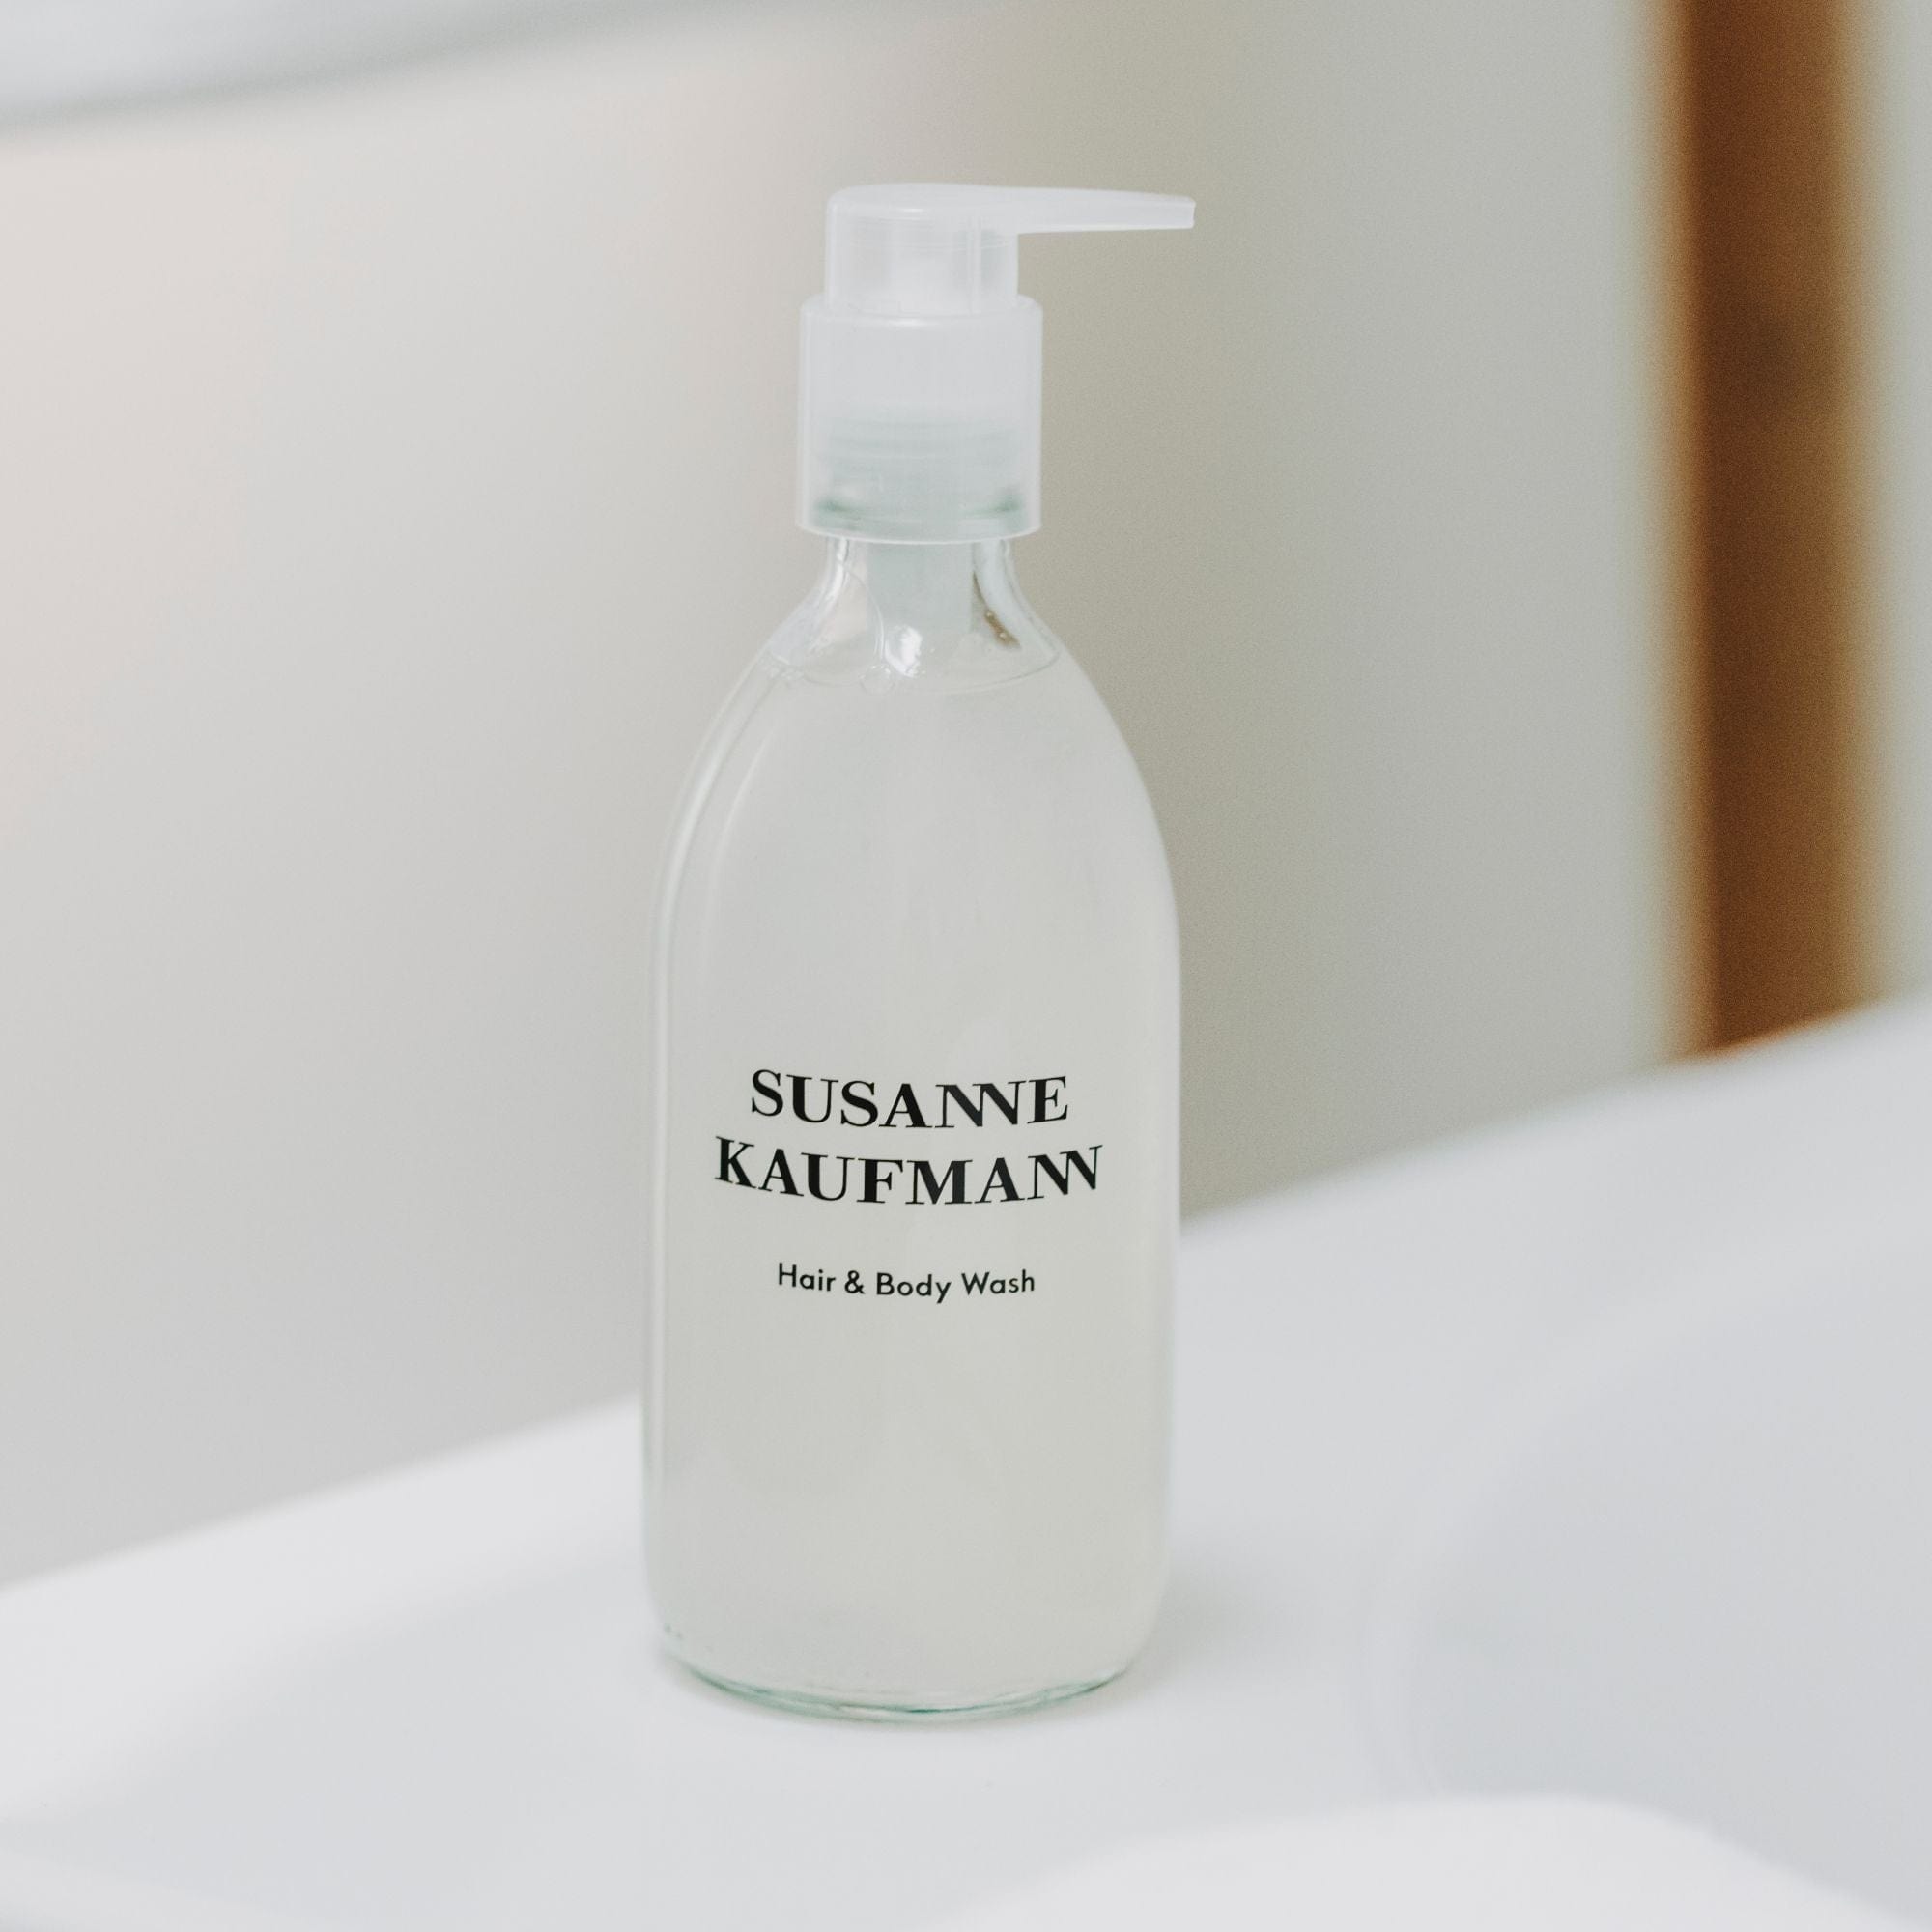 Hair & Body Wash Susanne Kaufmann  Gel limpiador corporal y capilar